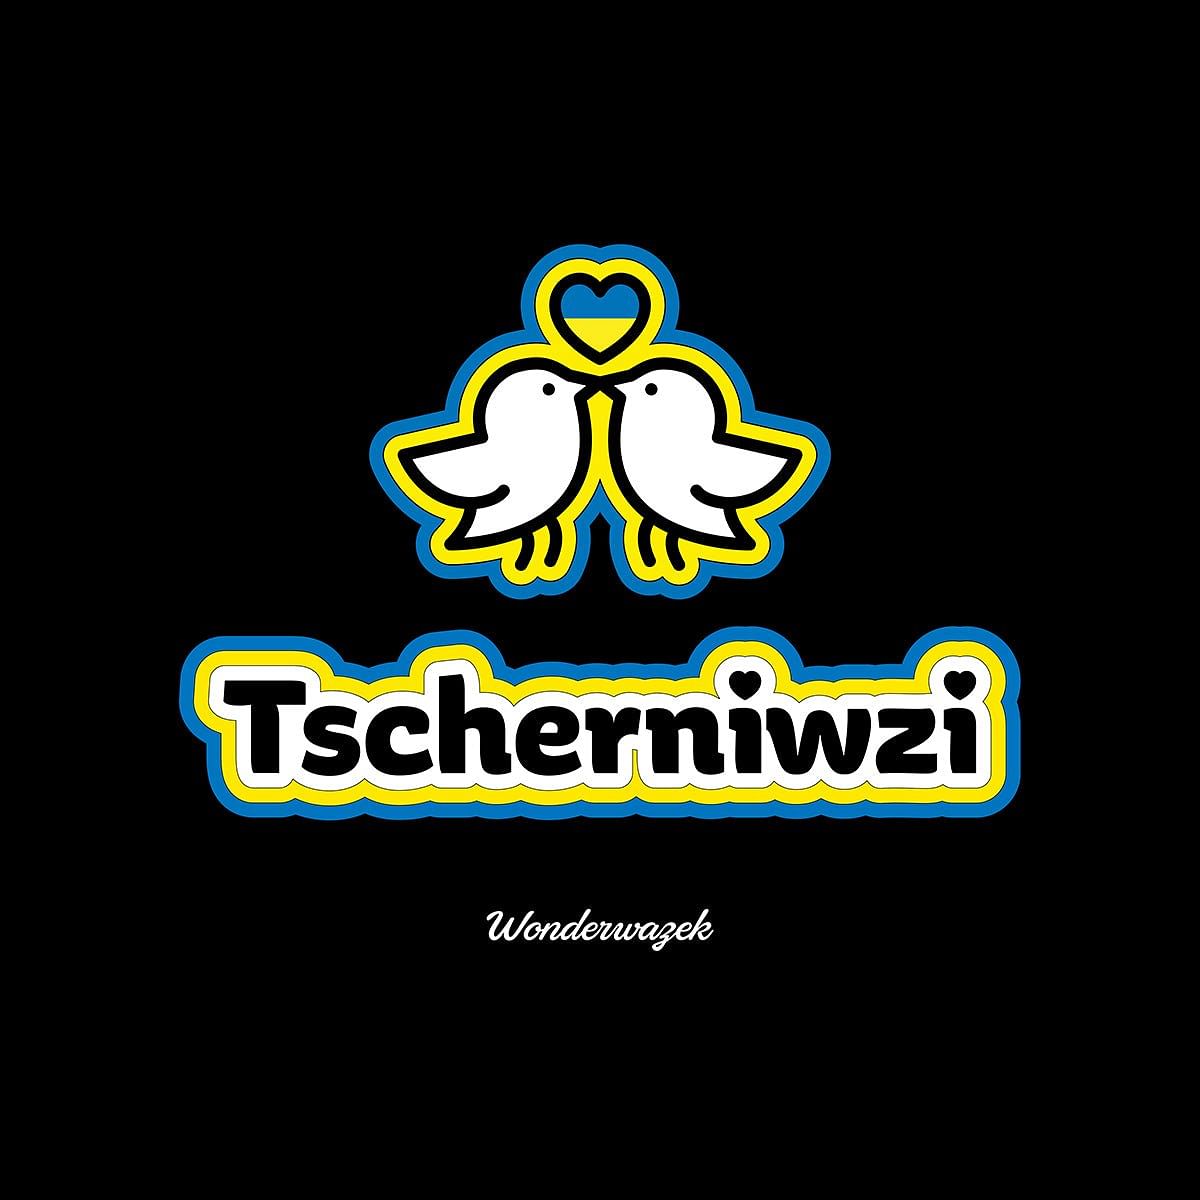 Einkaufstasche • Edition Friedenswazek – Tscherniwzi - Wonderwazek